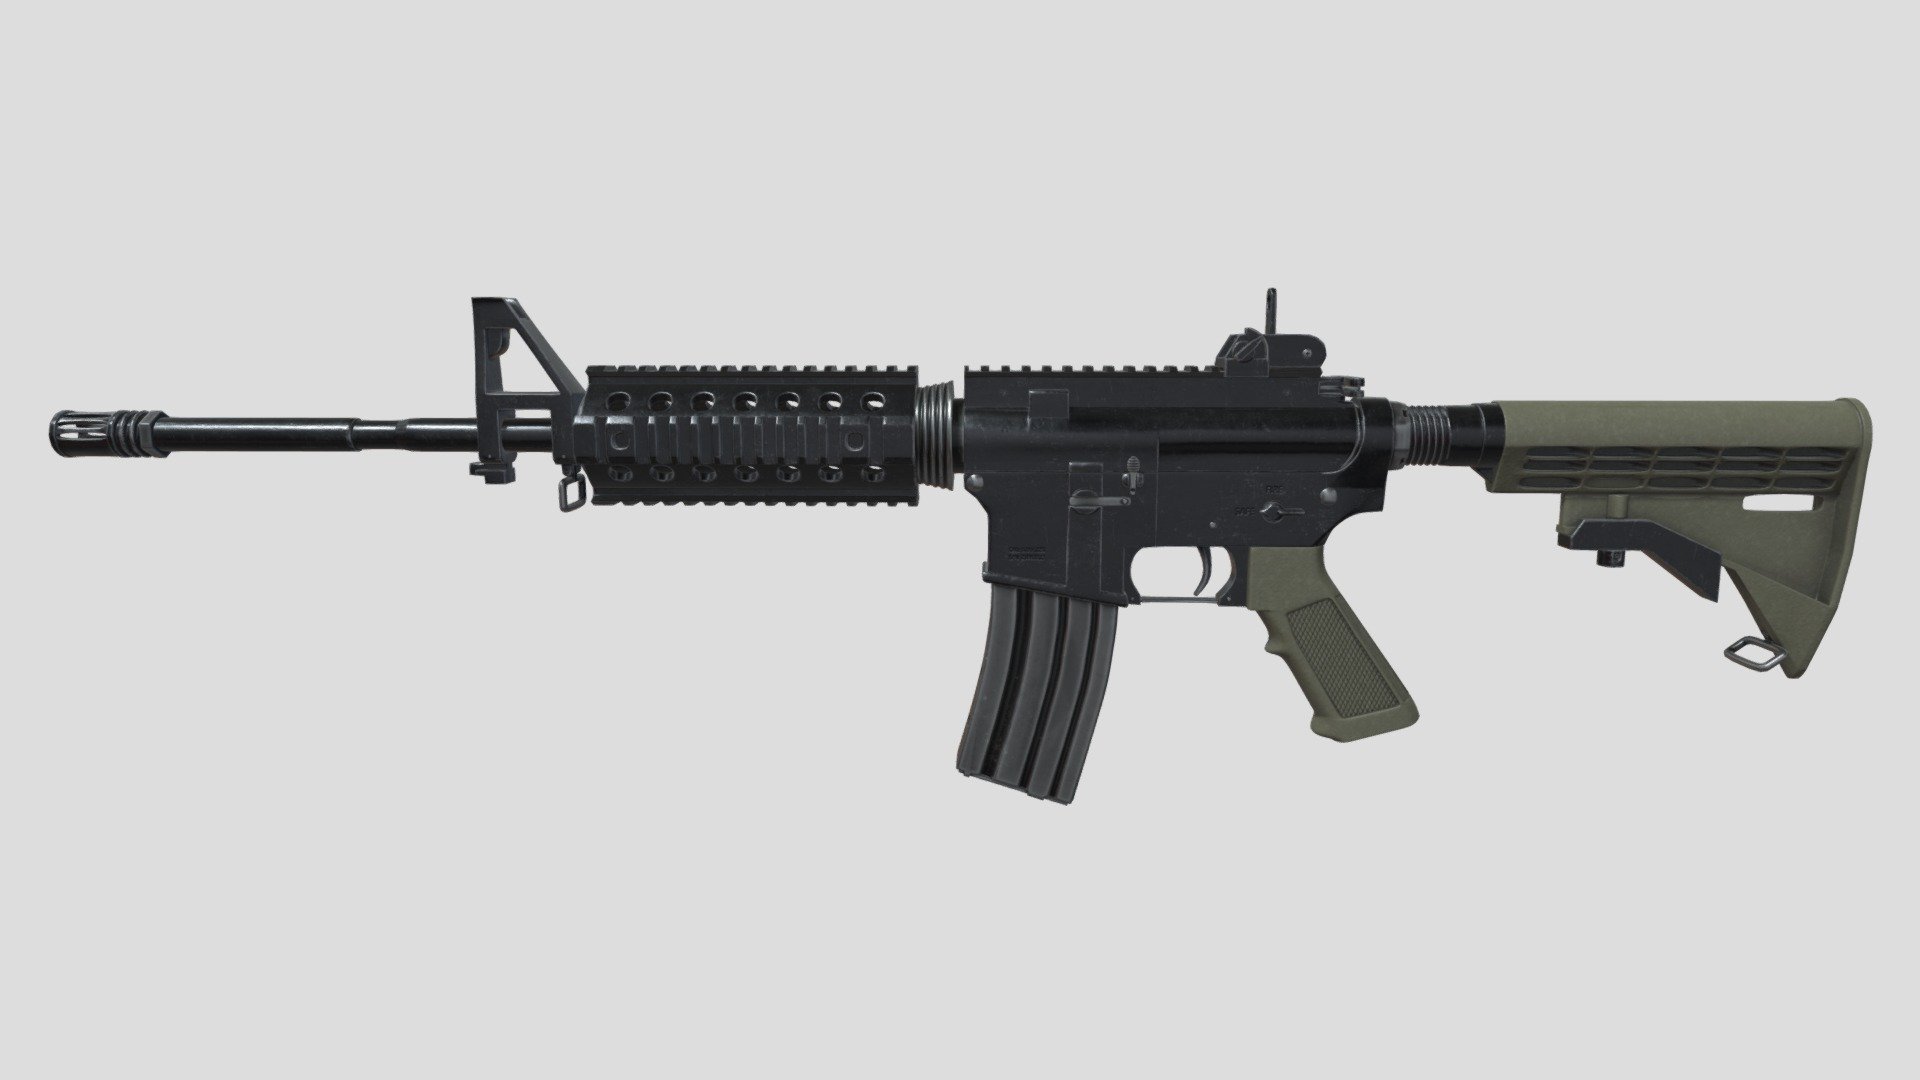 Blender model

4k textures (Substance Painter)
 - M4A1 - Assault Rifle - 3D model by user77 3d model